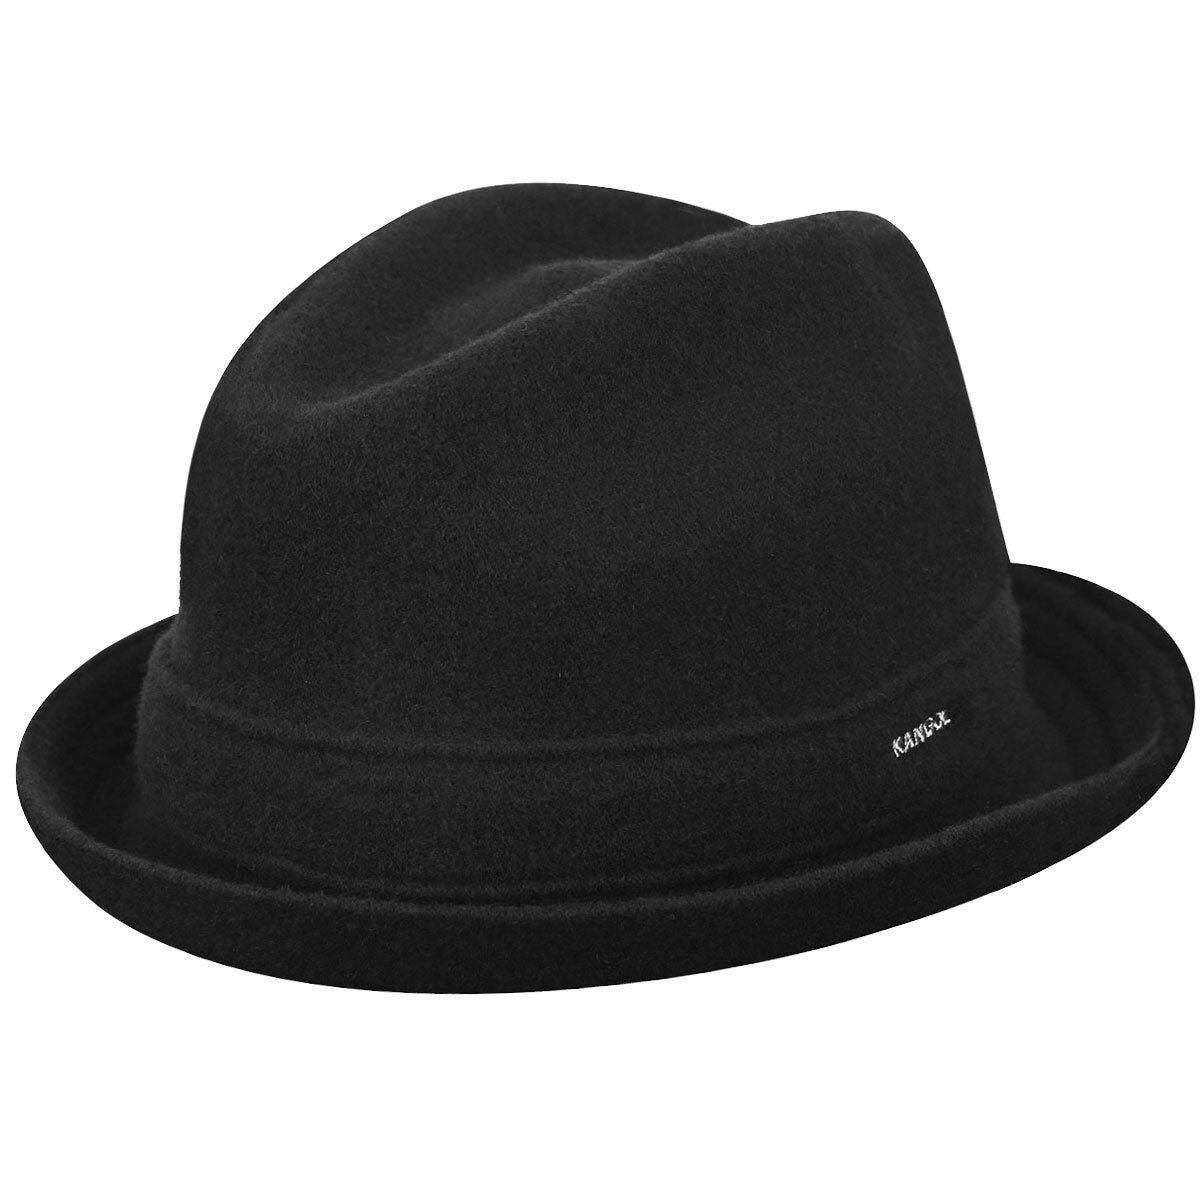 KANGOL Wool Player Trilby Hat Fedora Style Warm Winter Cap 6447BC